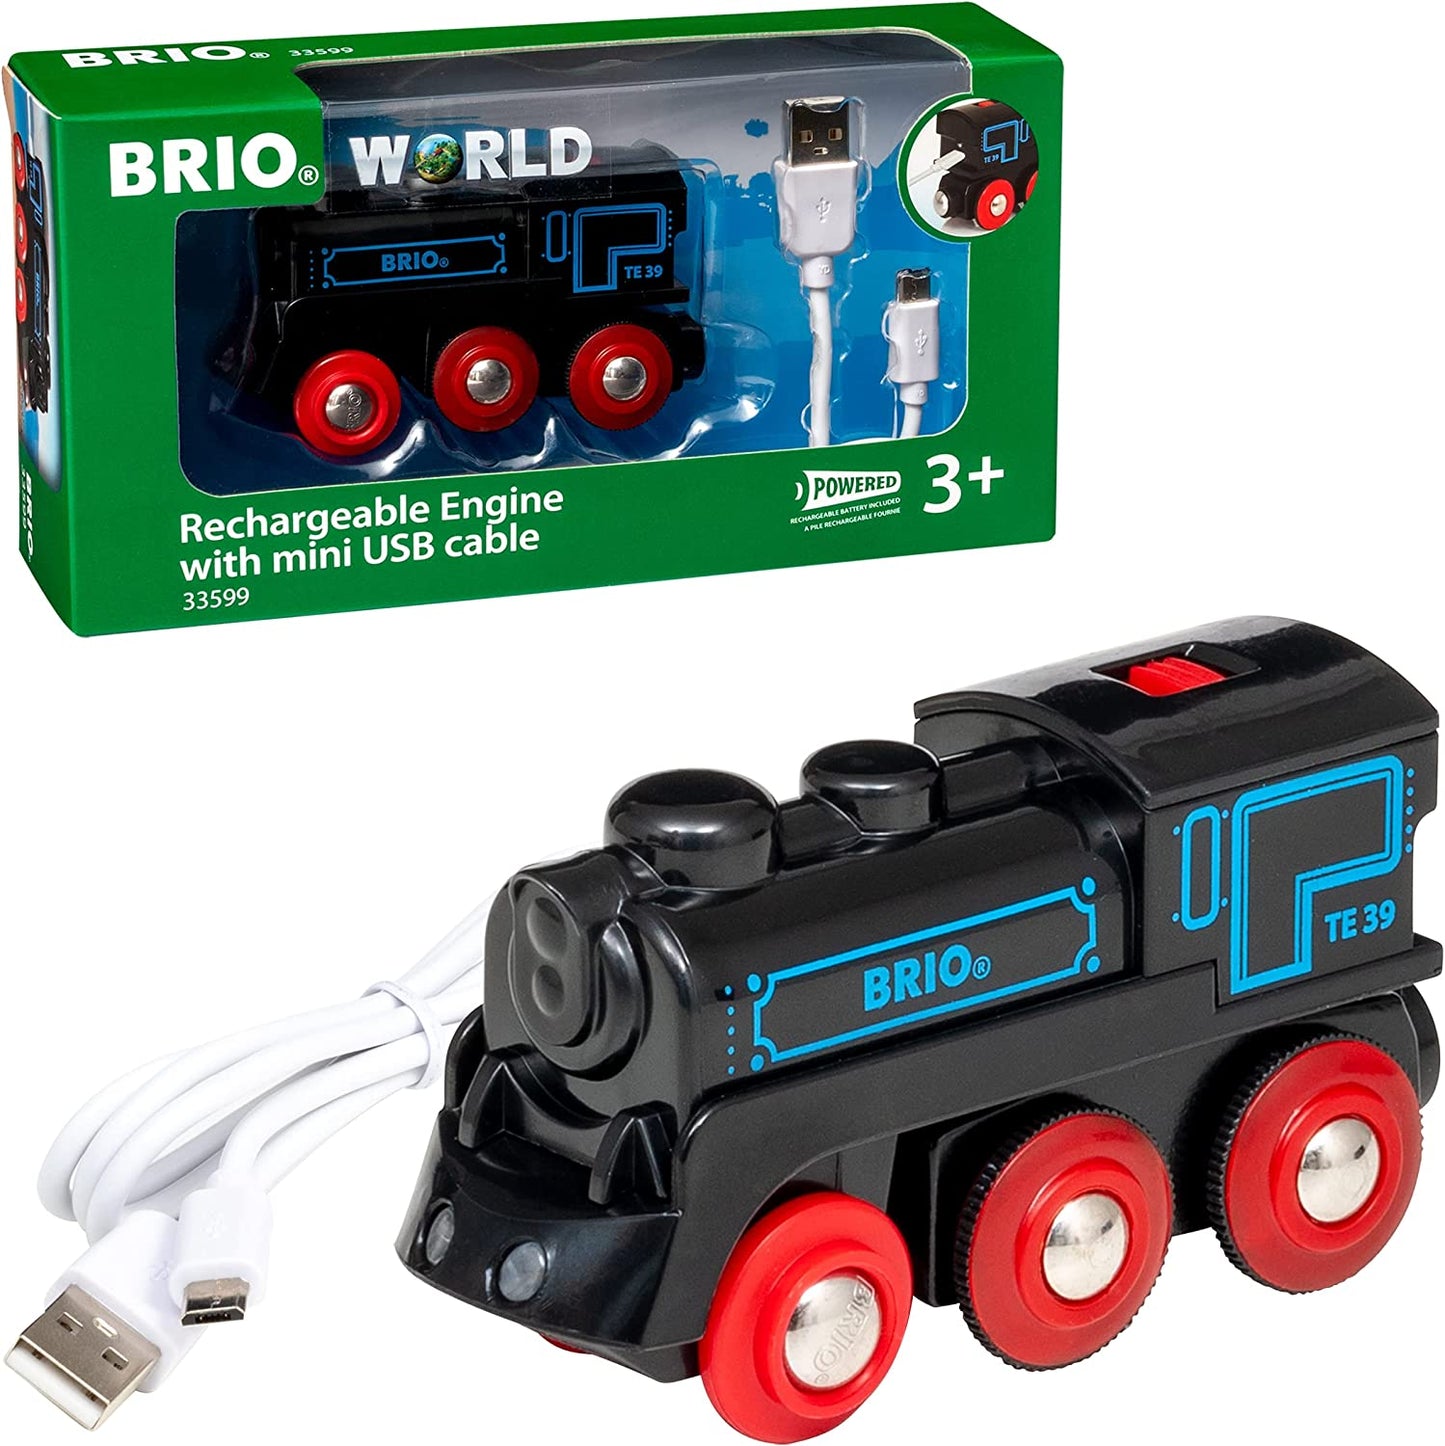 Locomotiva ricaricabile con cavo mini USB Brio